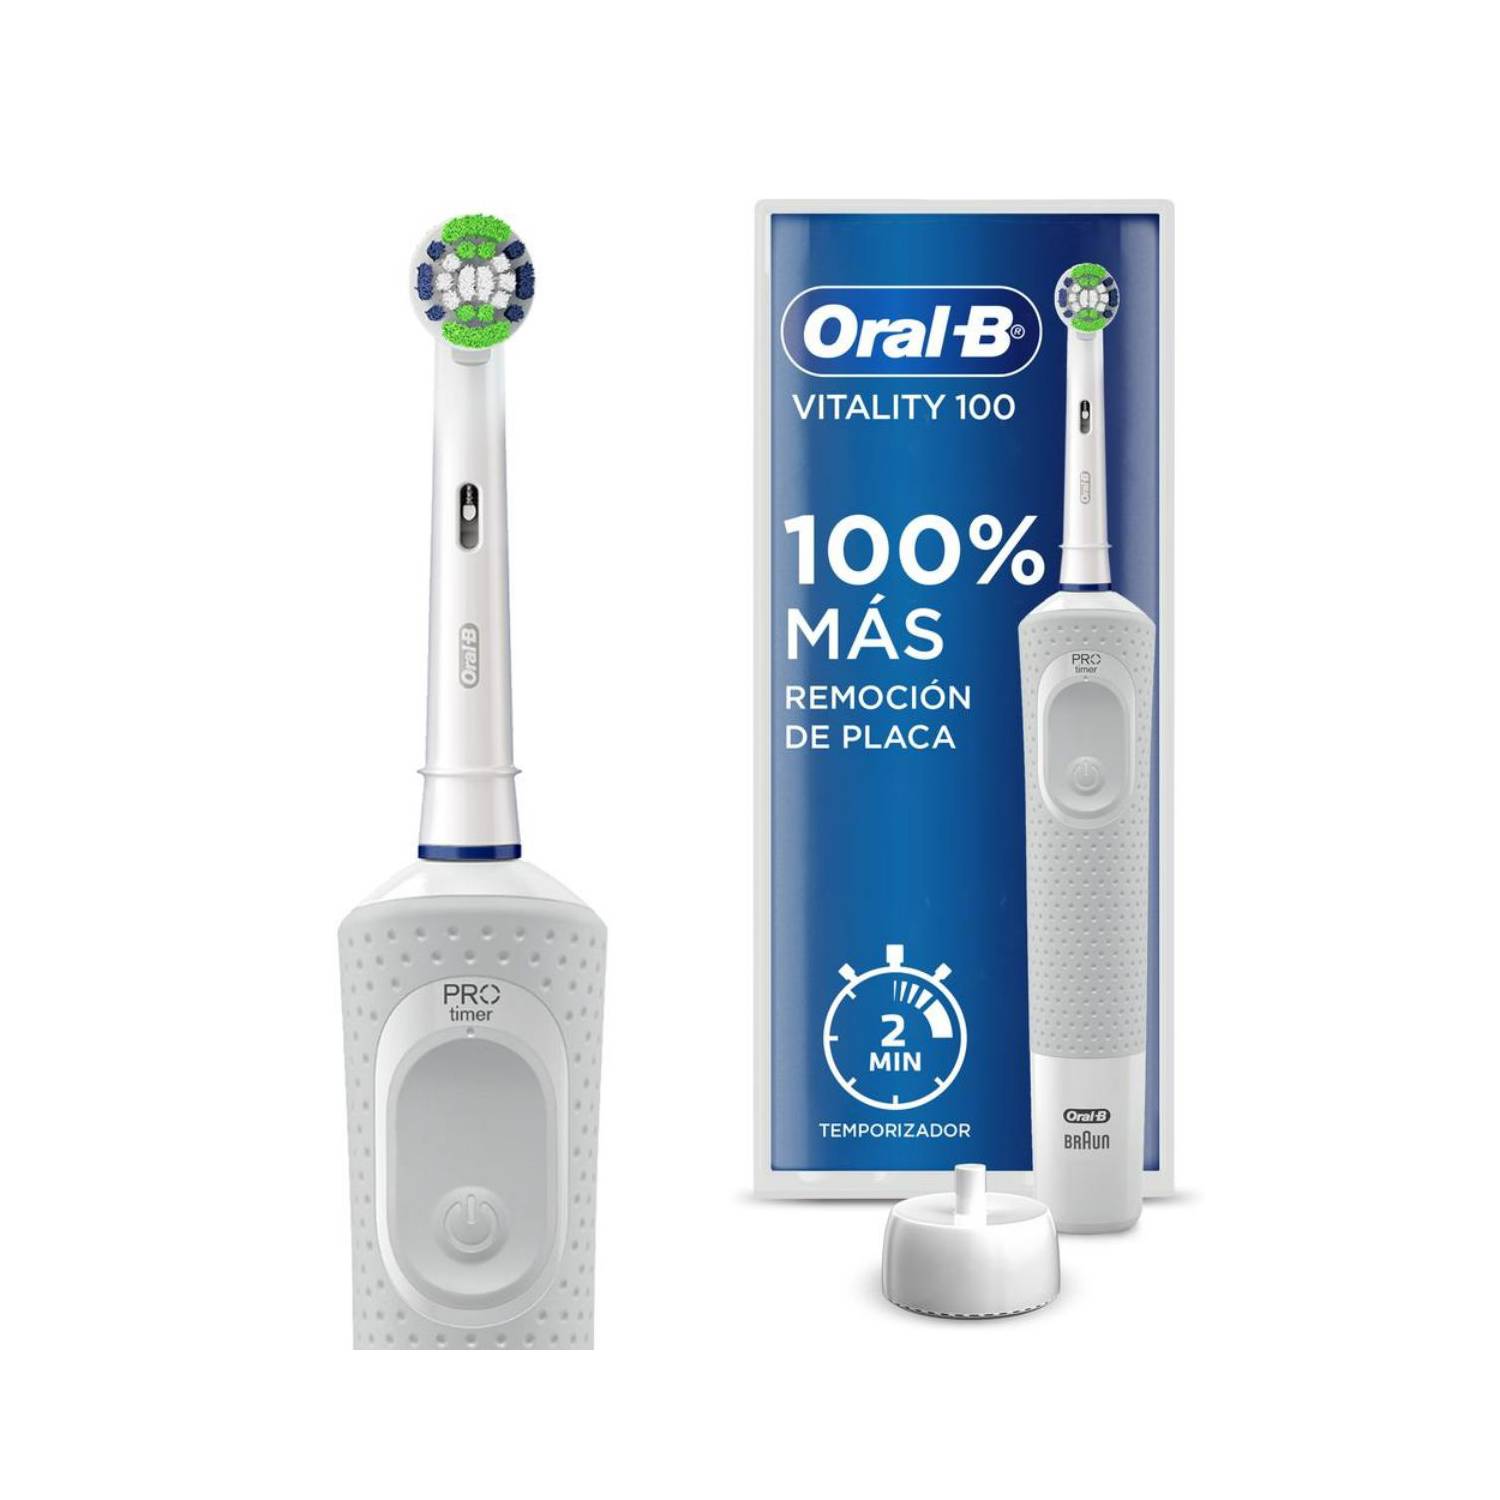 ORAL B cepillo dental electrico Oral-B vitality